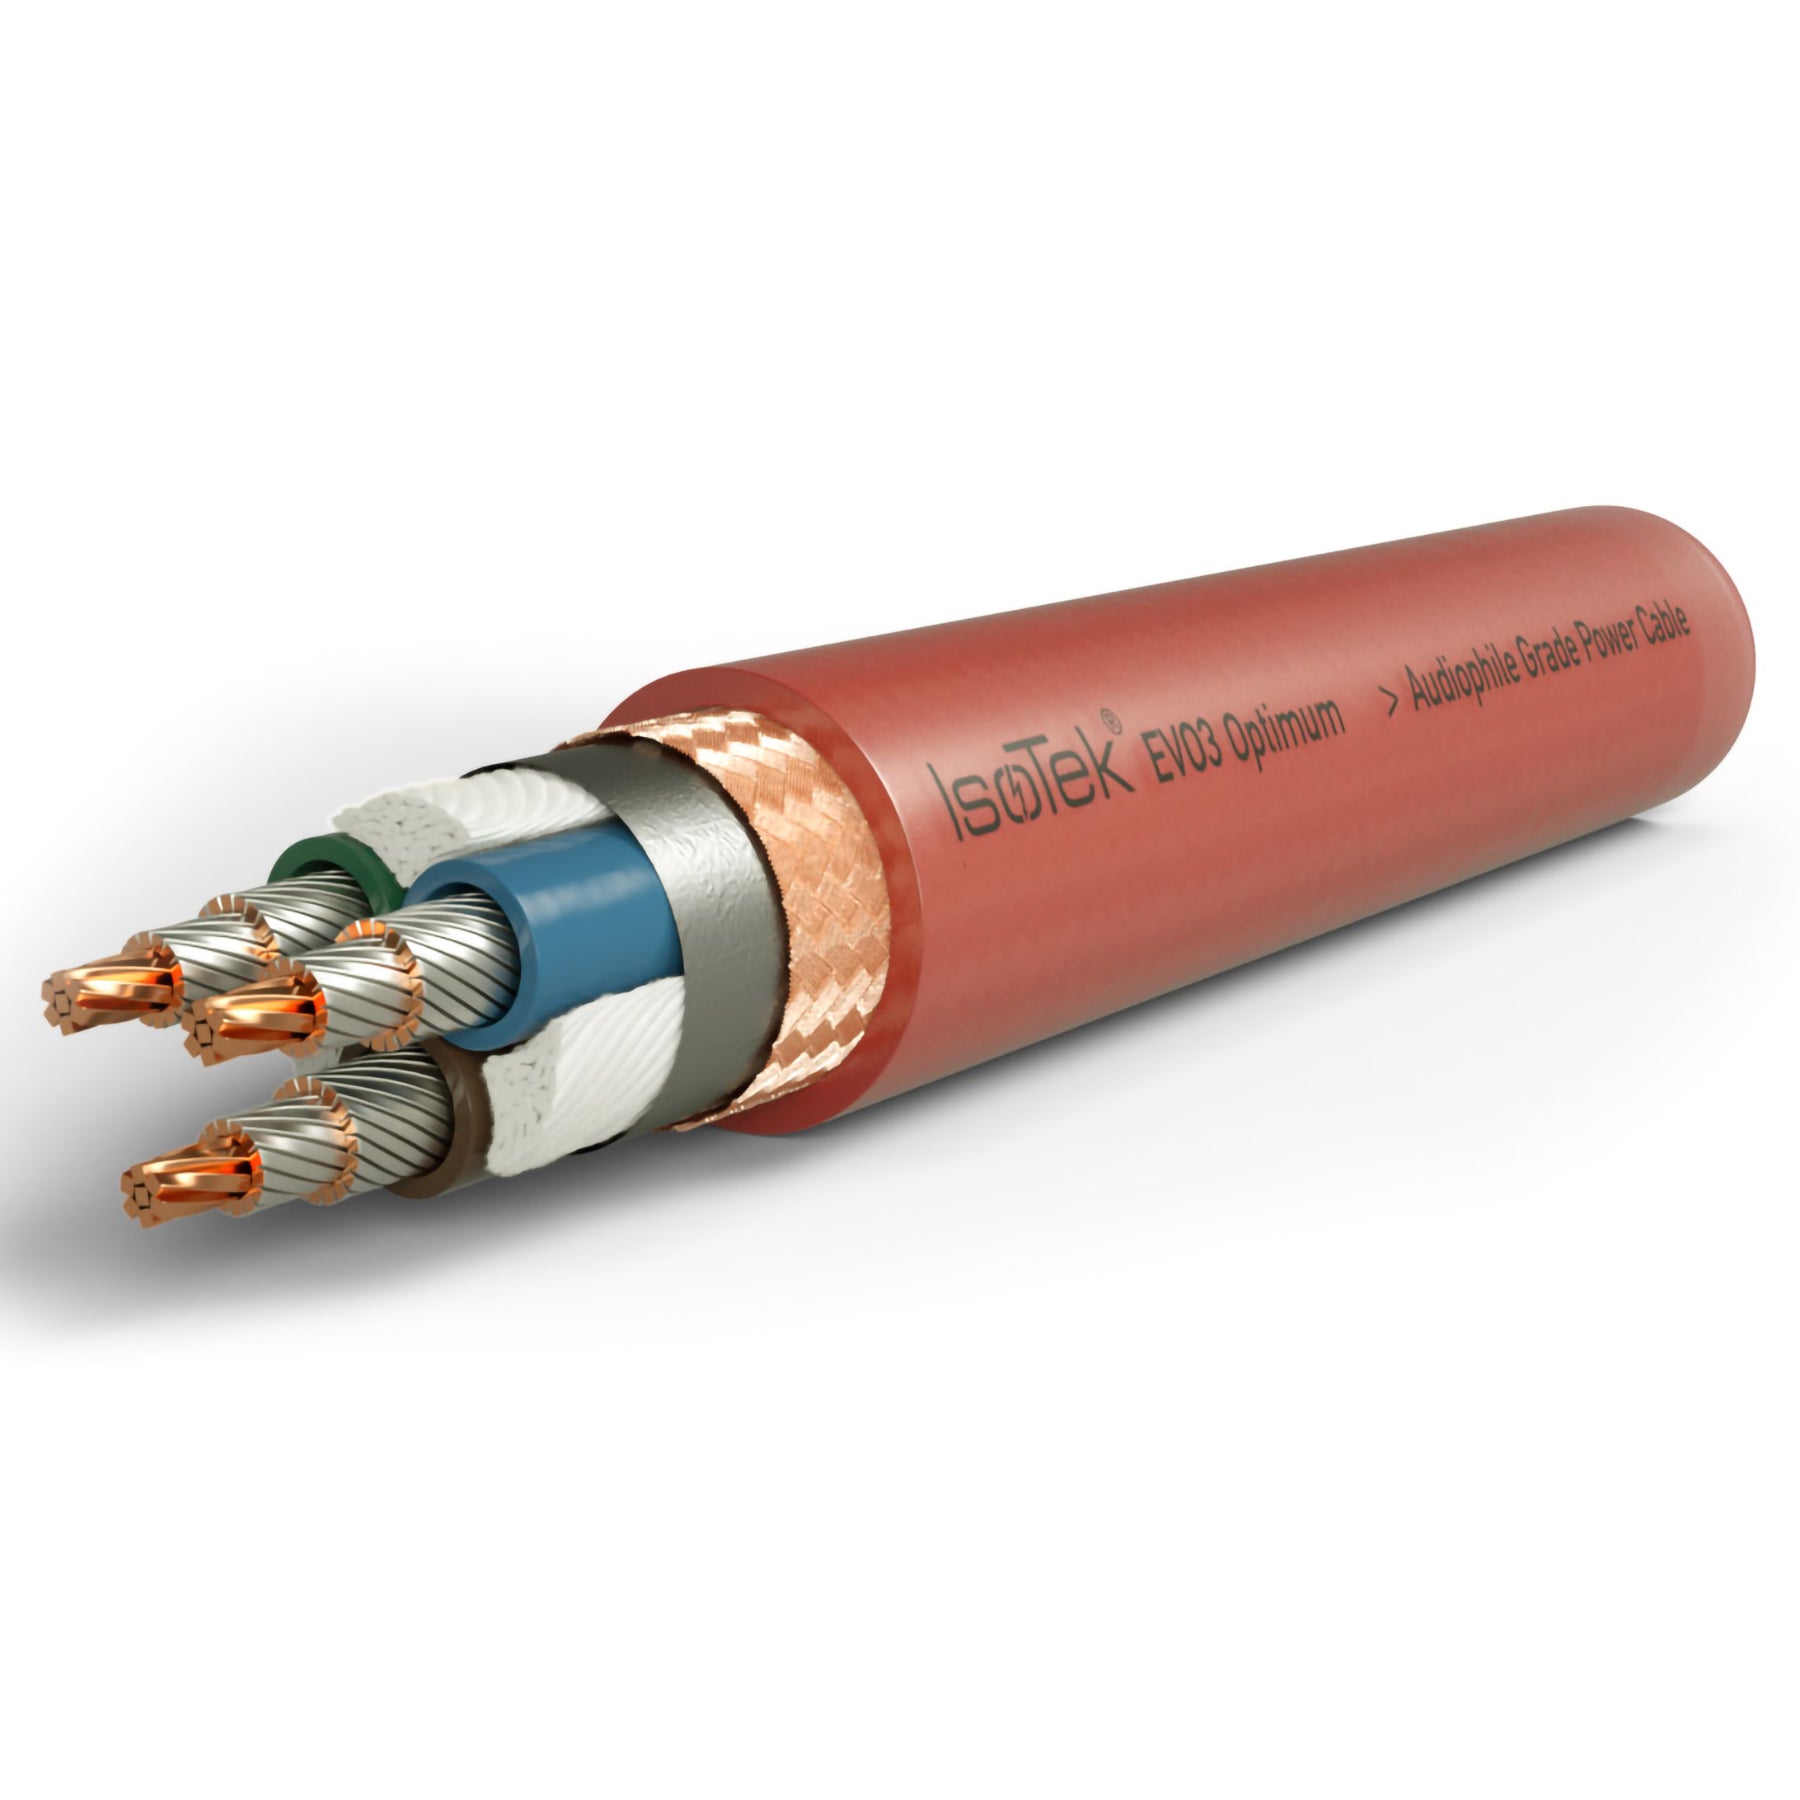 IsoTek EVO3 Optimum Power Cable